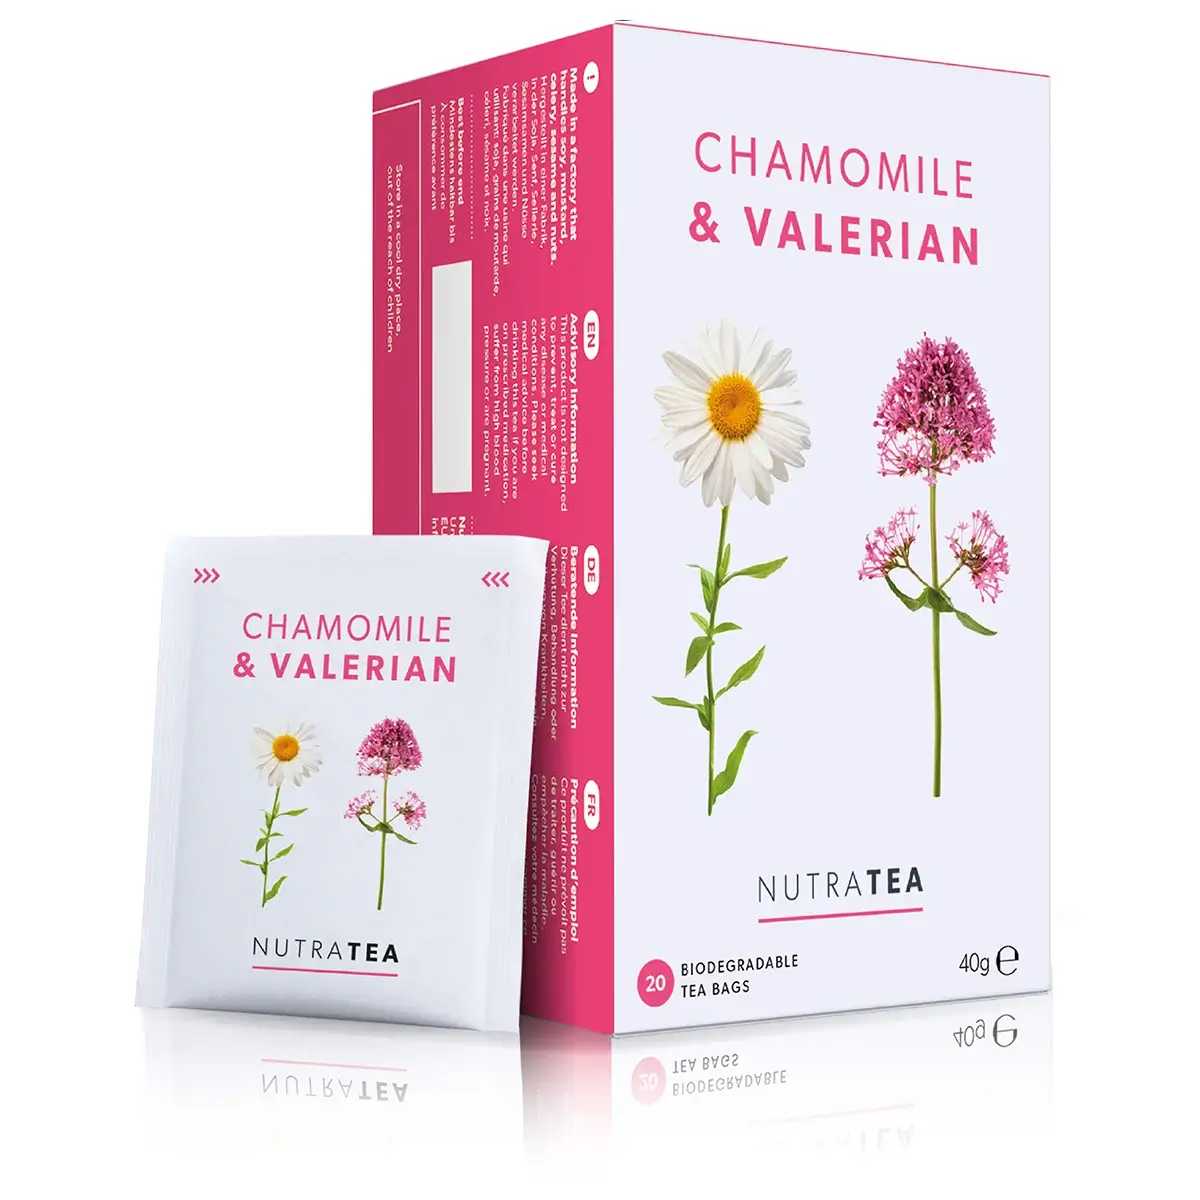 Chamomile & Valerian Tea - Herbal Tea - 20 Biodegradable Tea Bags